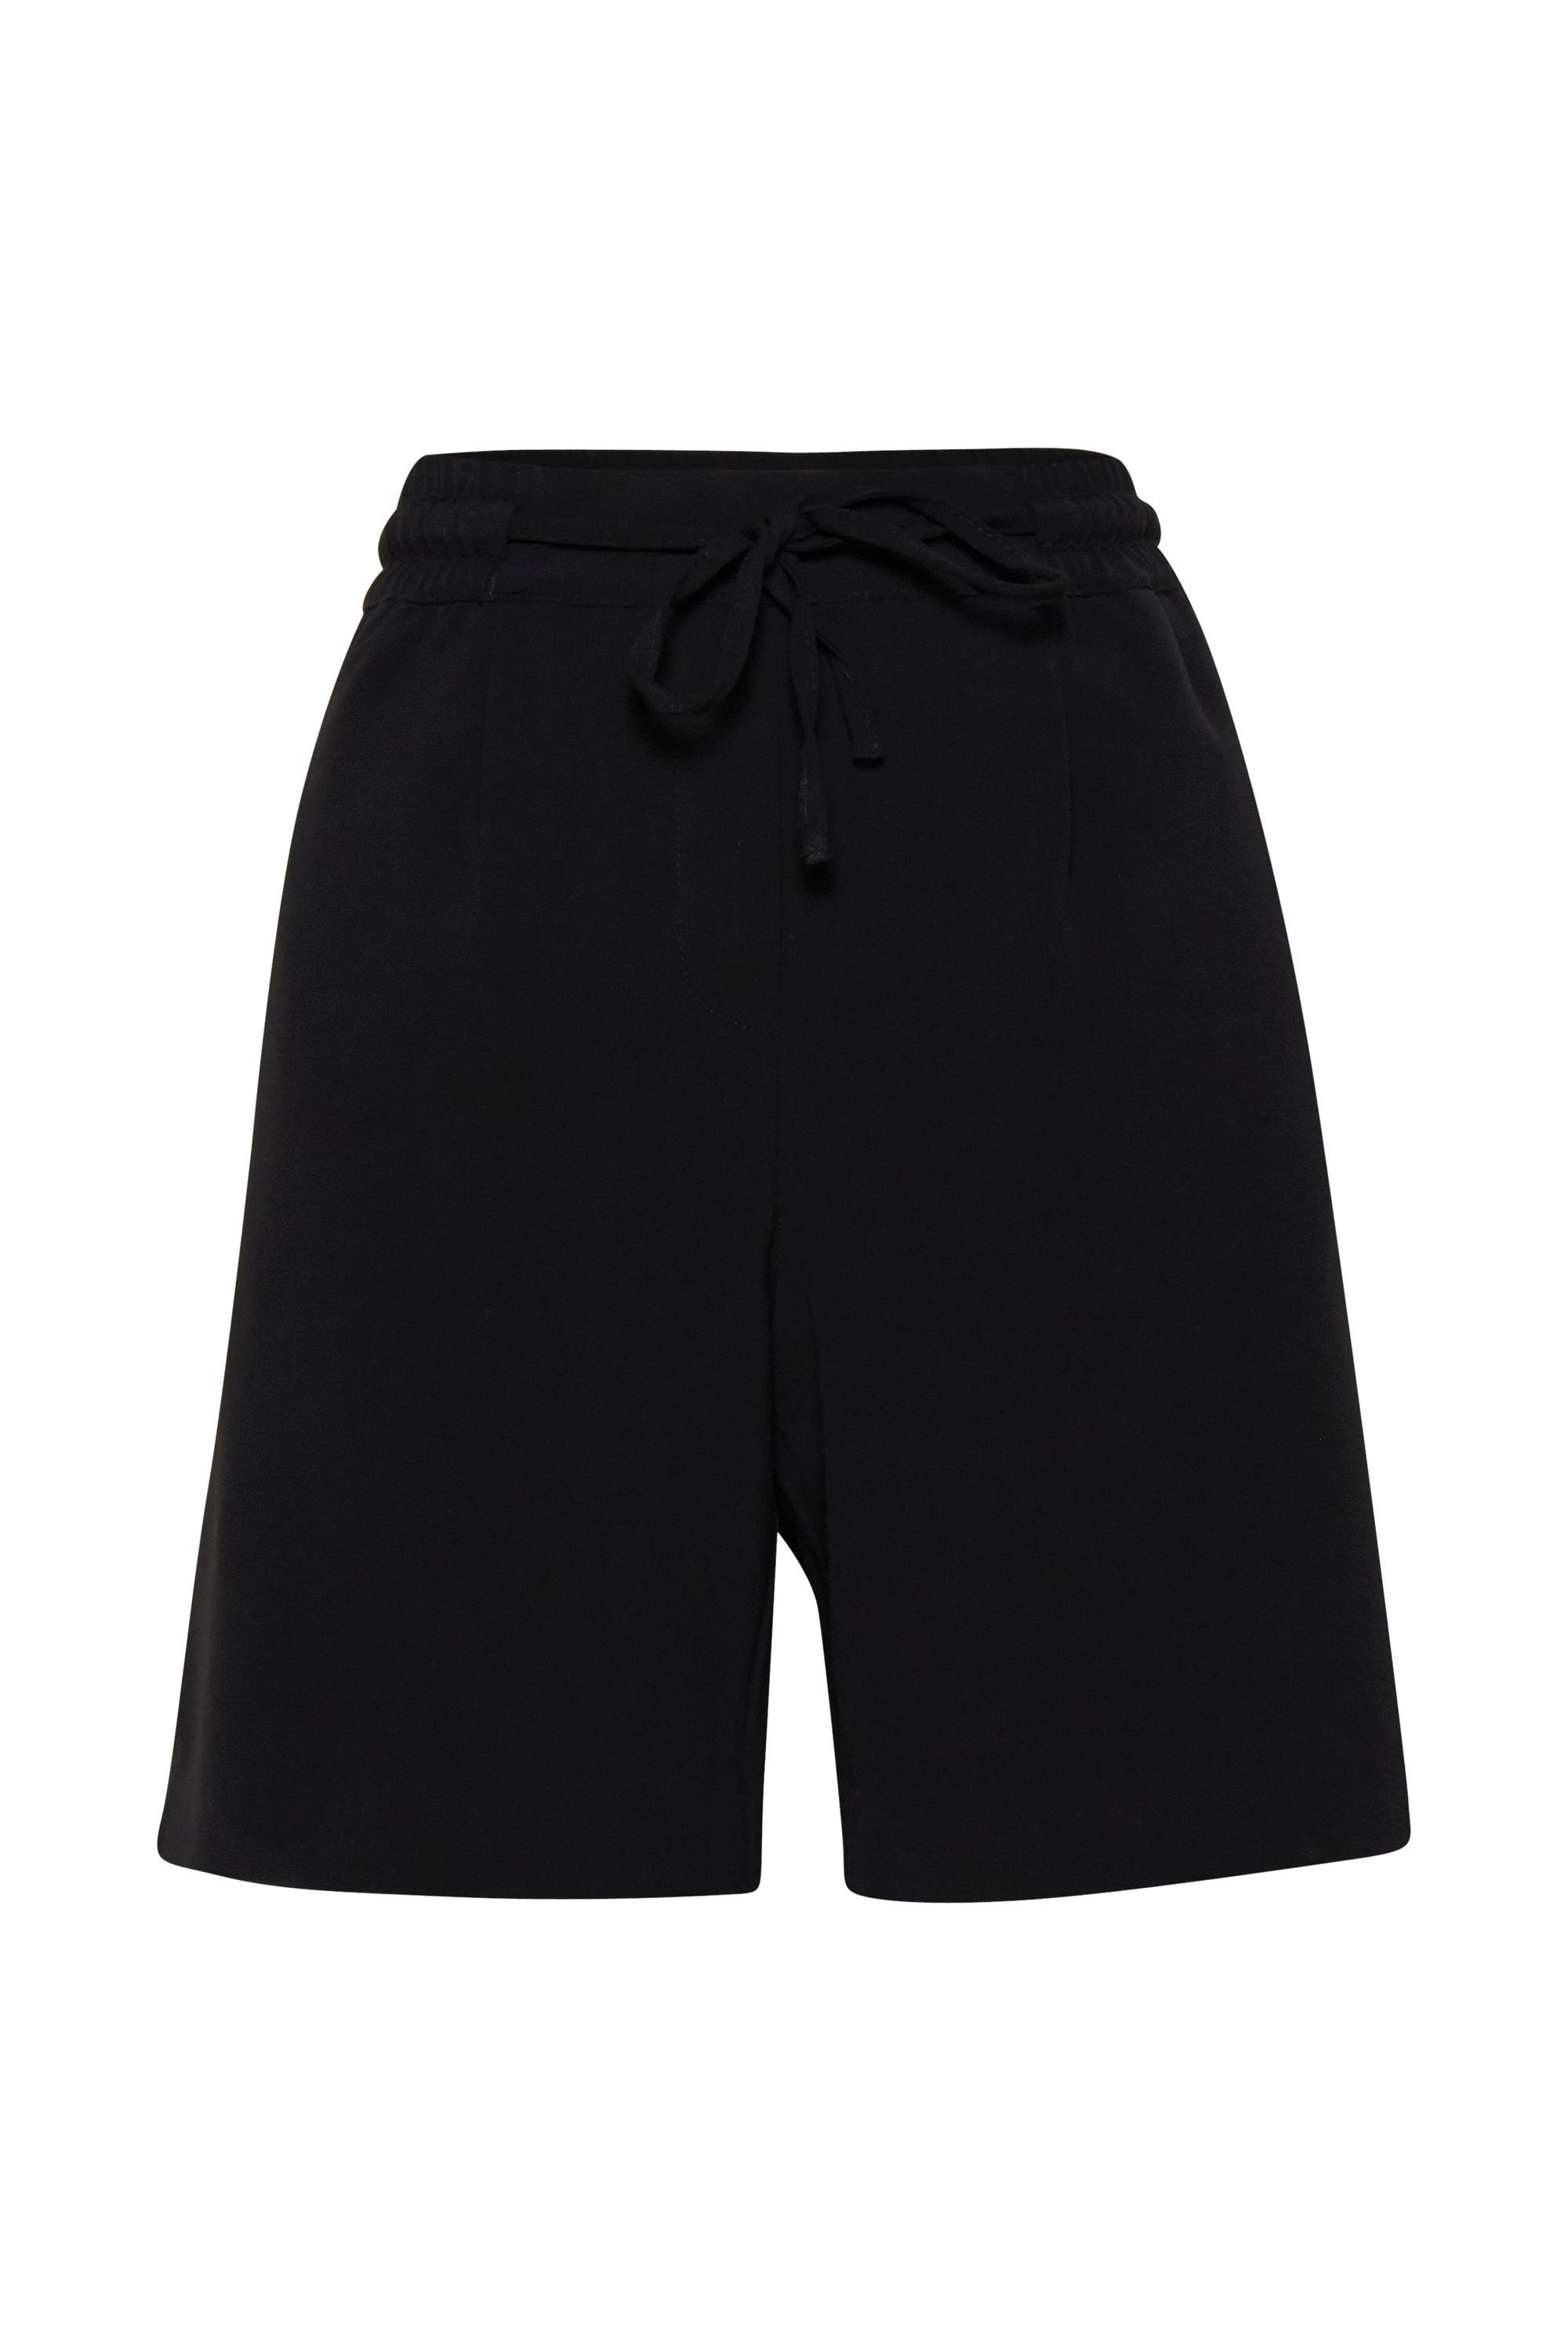 b.young Shorts BYDANTA SHORTS - 20808201 Shorts mit Kordeln Black (80001)